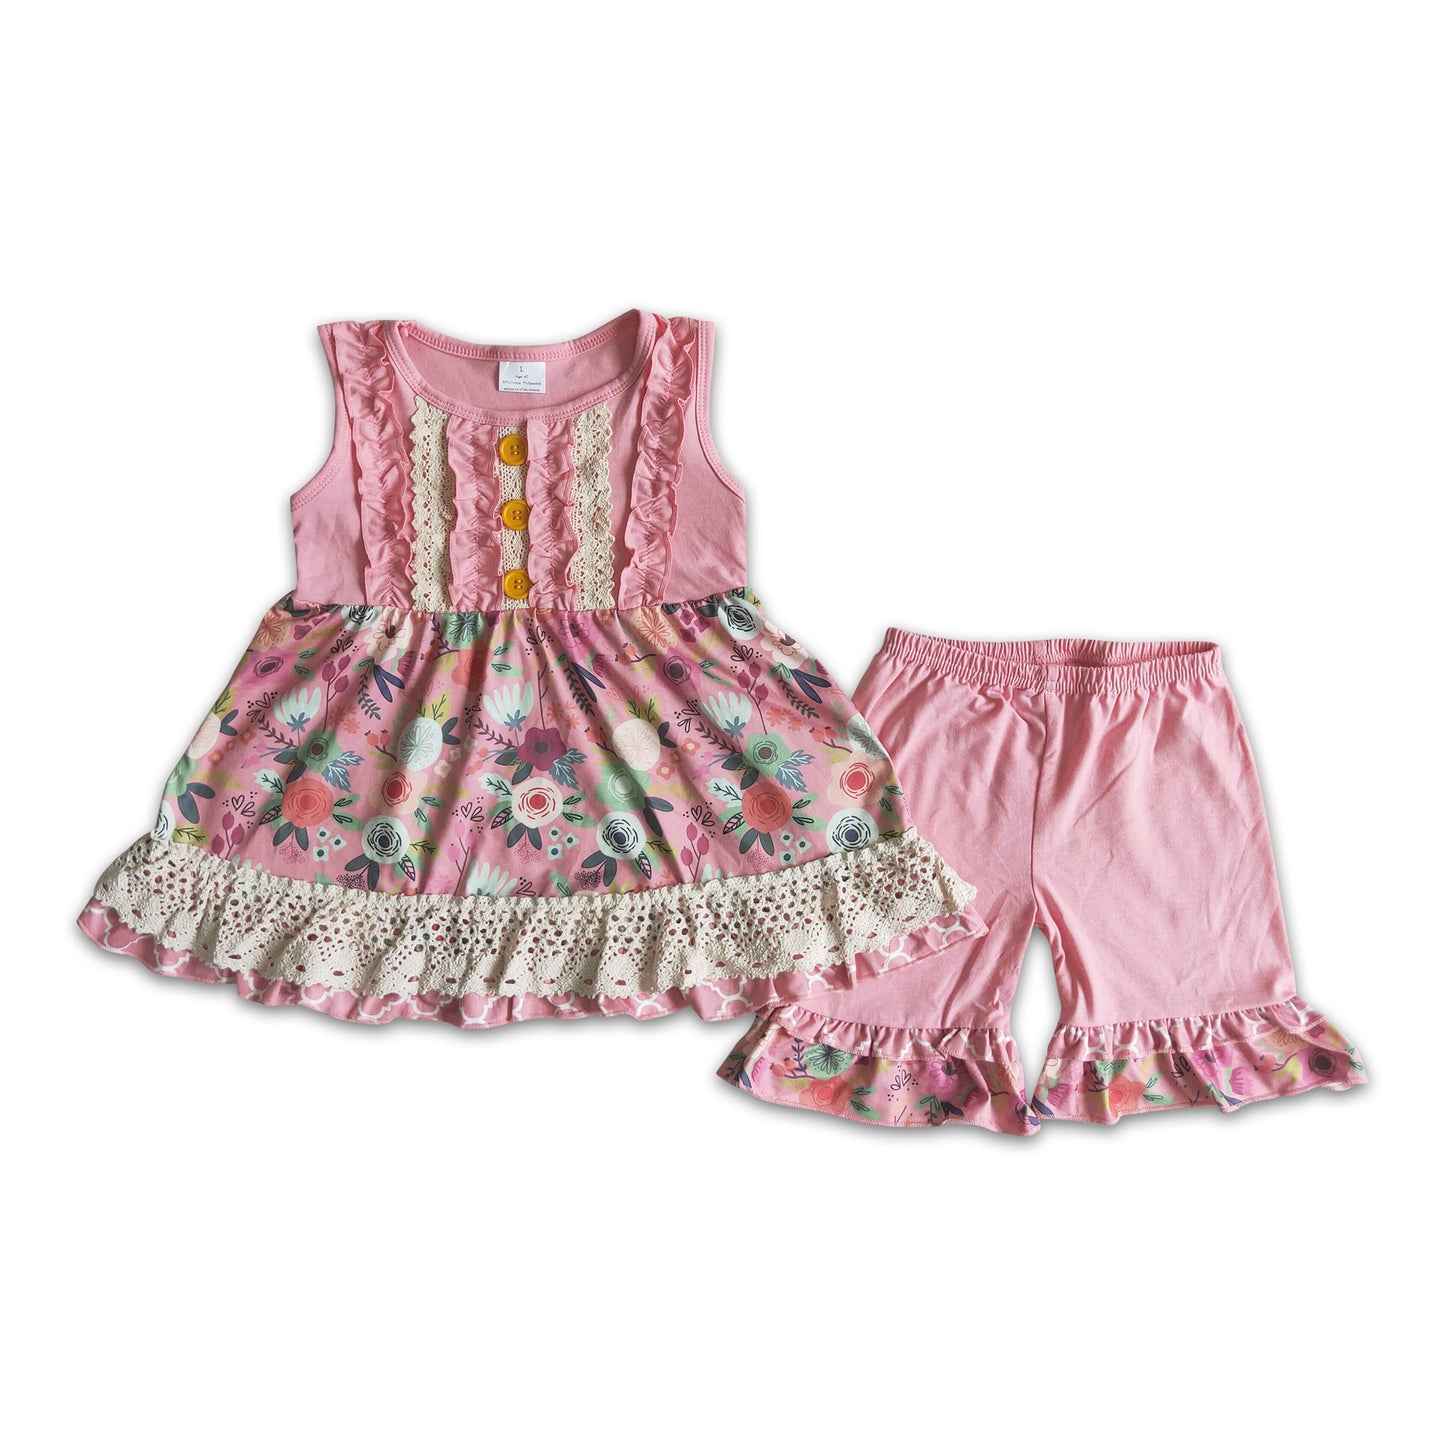 Pink floral tunic ruffle shorts girls clothing set